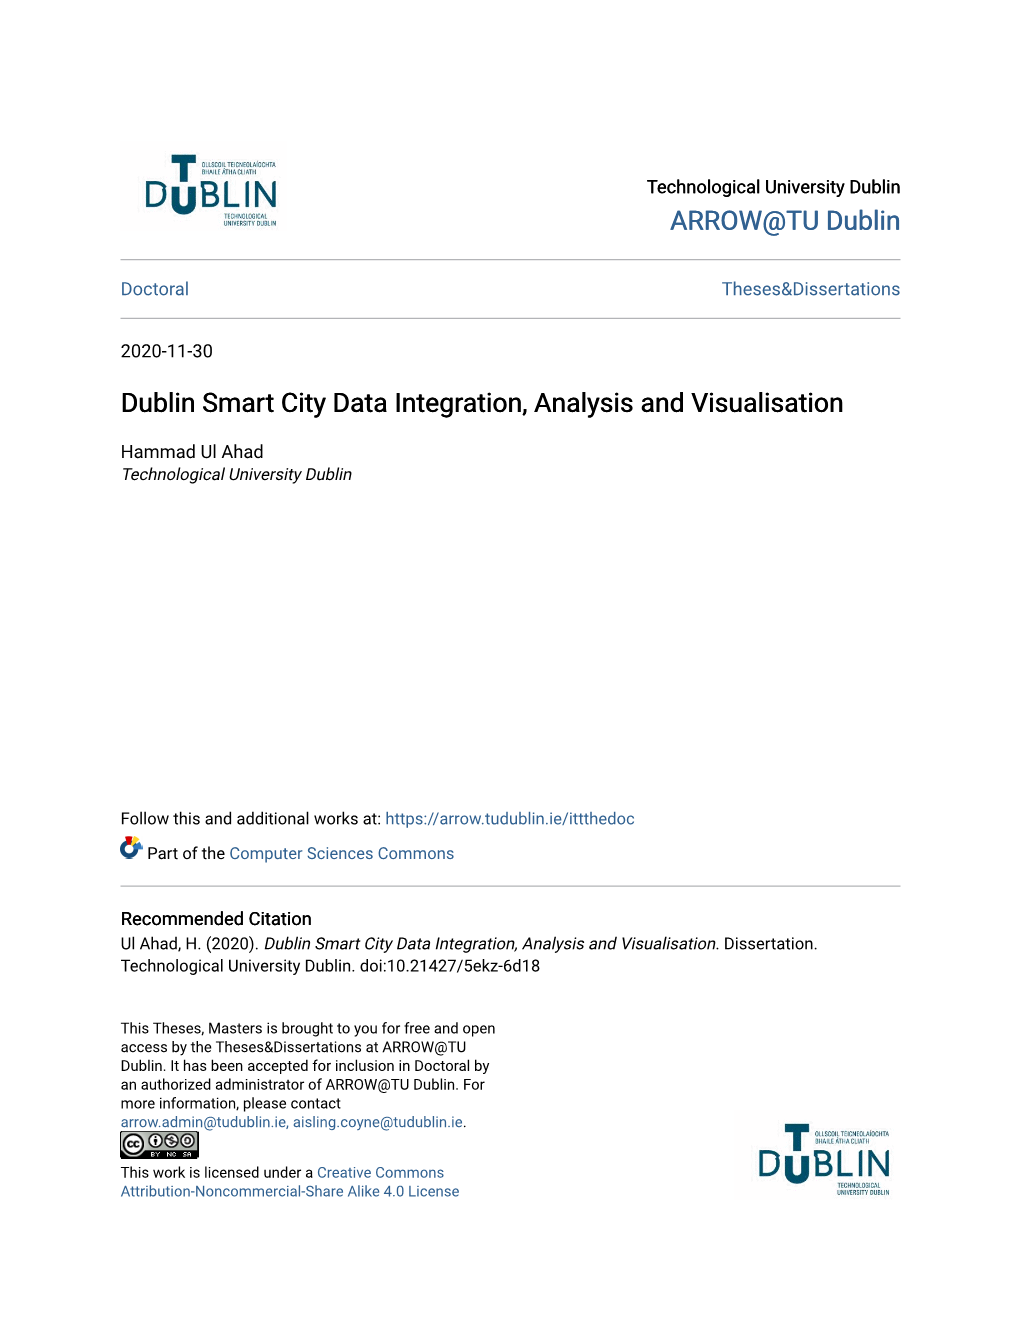 Dublin Smart City Data Integration, Analysis and Visualisation